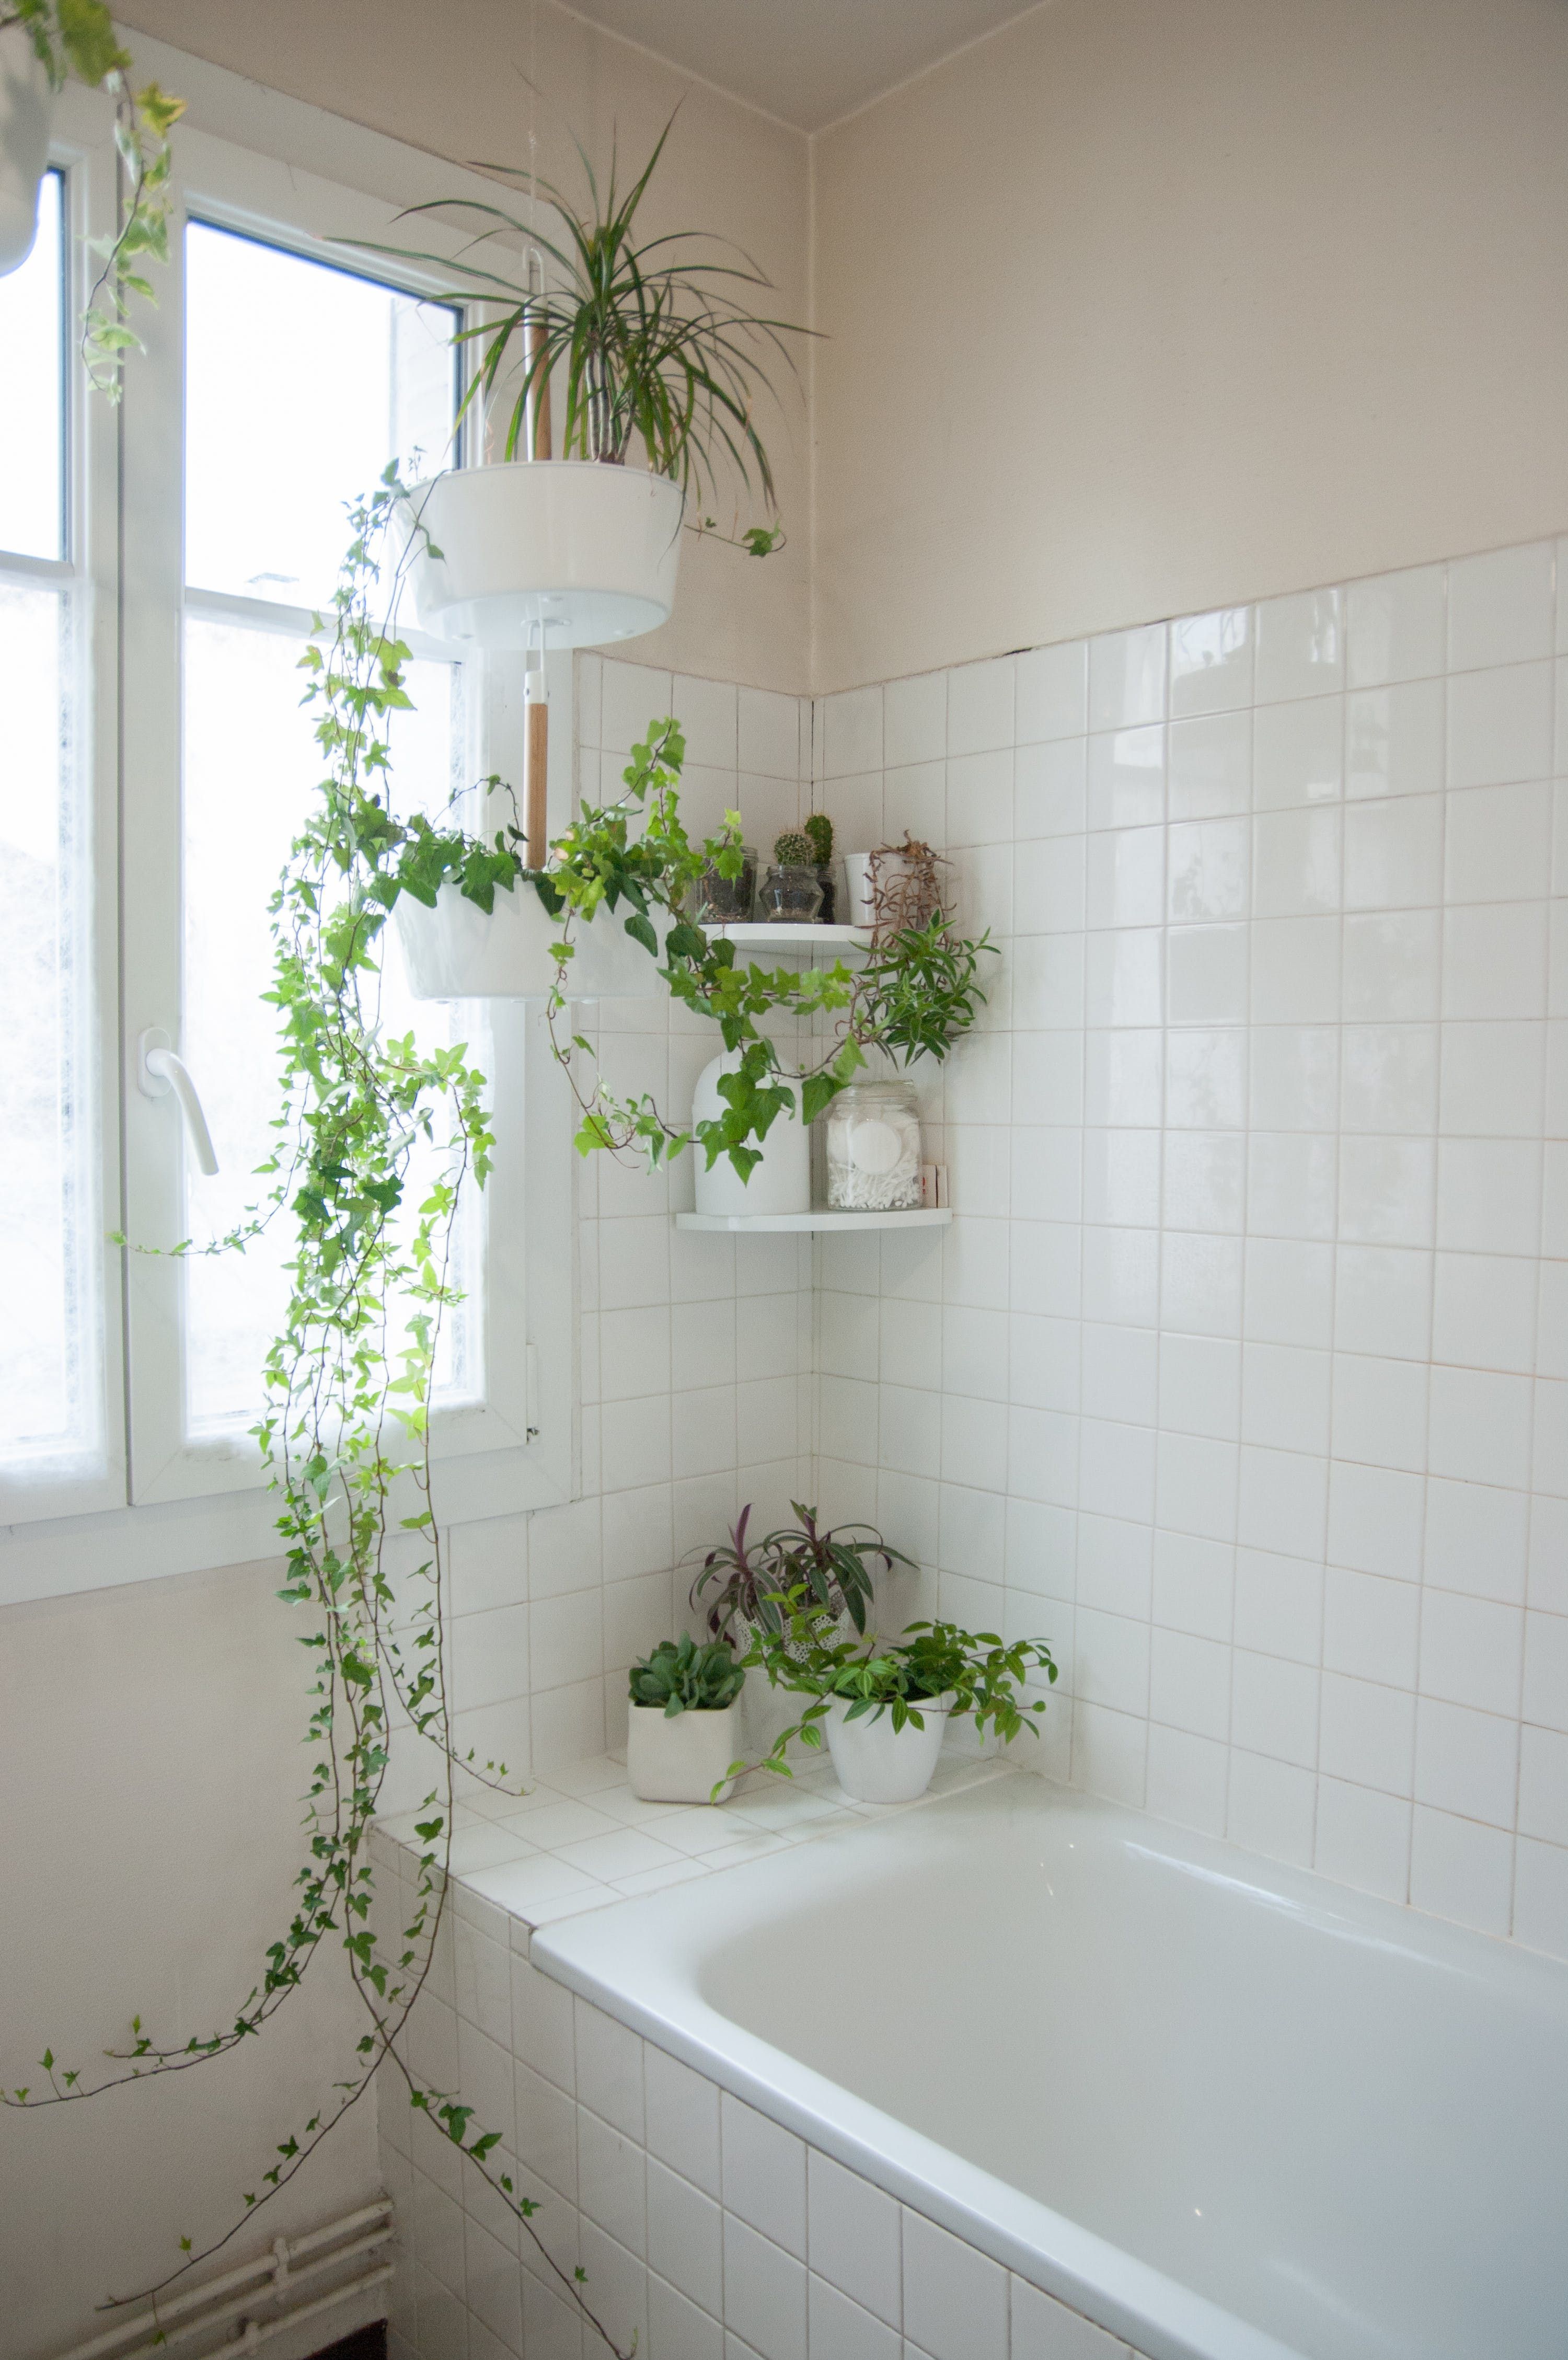 14 plants Bathroom no light
 ideas